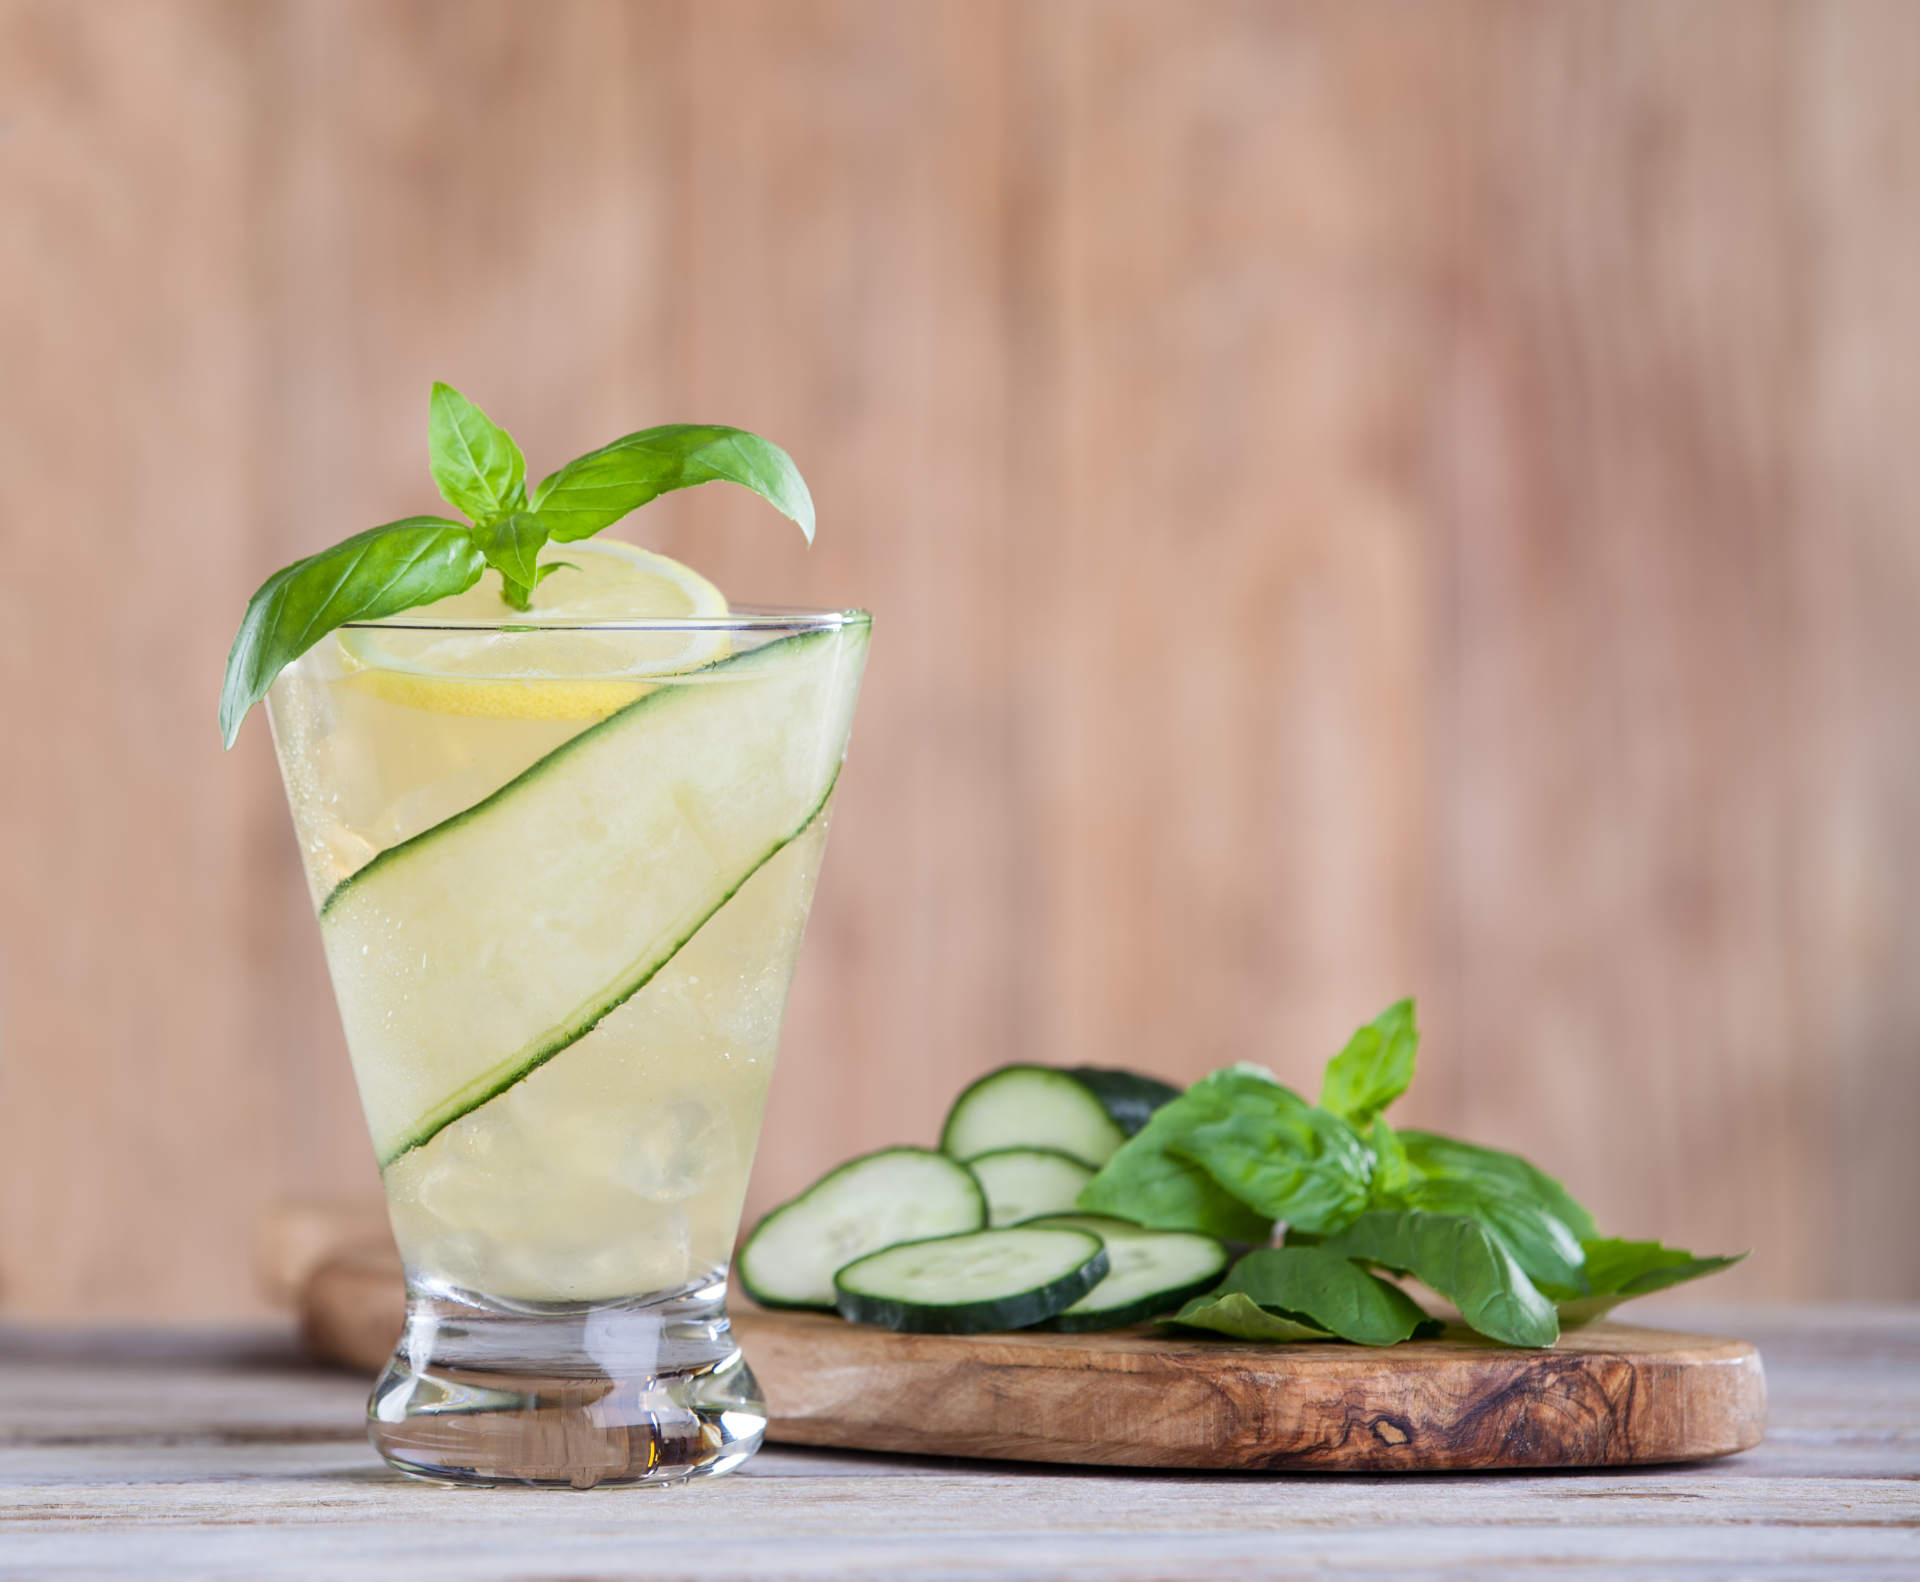 Basil Lemon Iced Tea with cucumber slides on a wooden slab